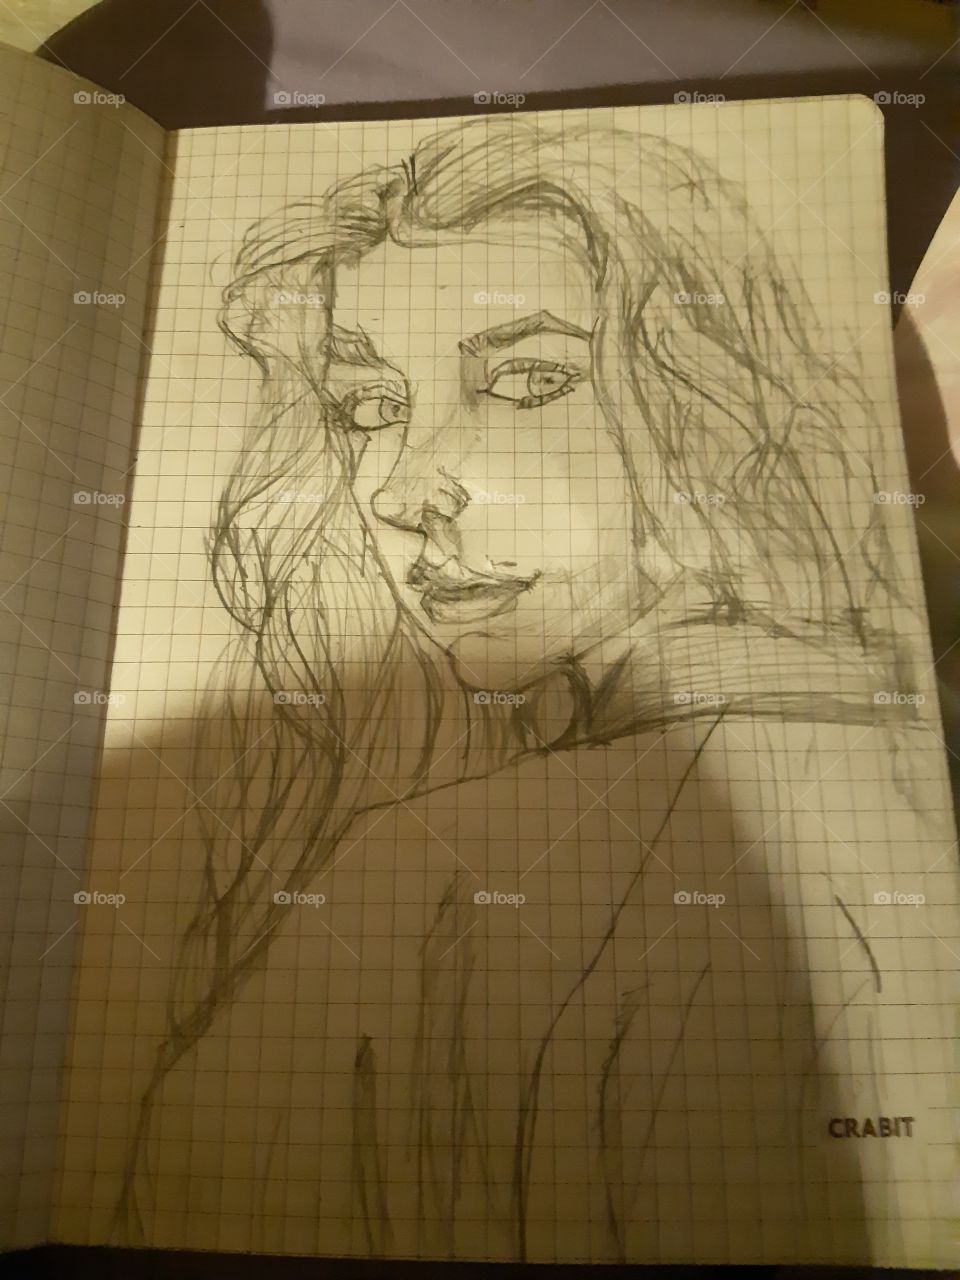 My self-drawing portrait